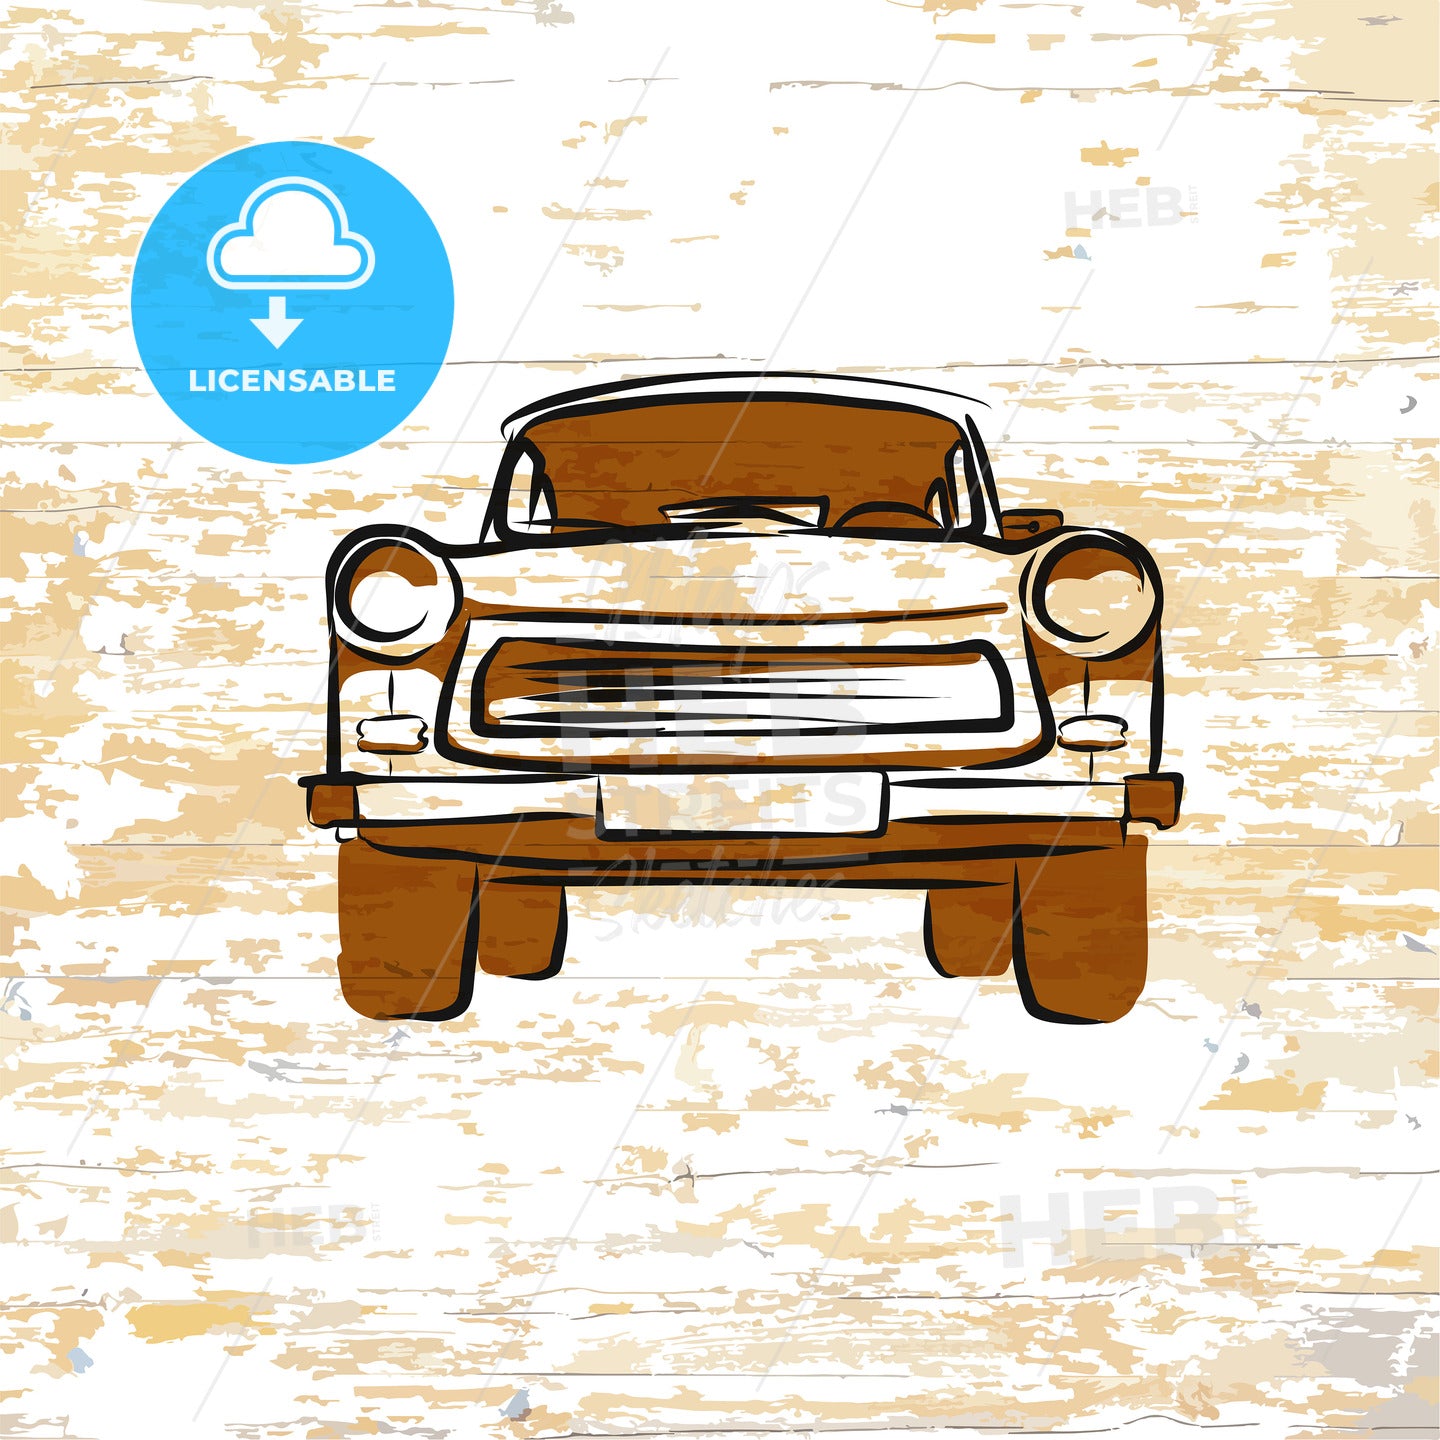 Vintage german car icon on wooden background – instant download